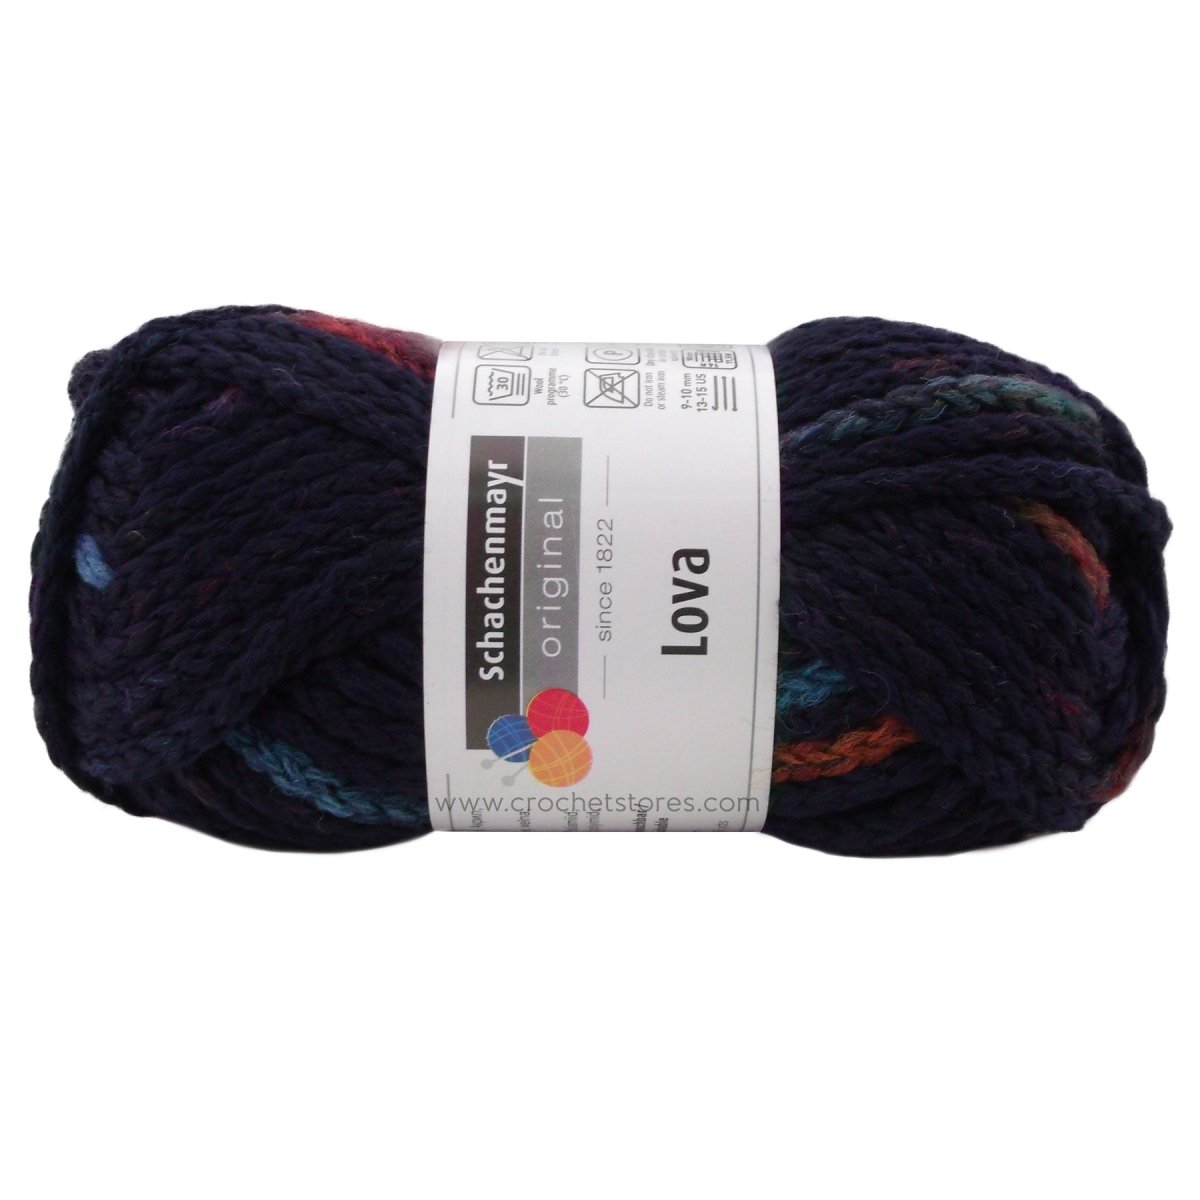 LOVA - Crochetstores9807543-884053859043052